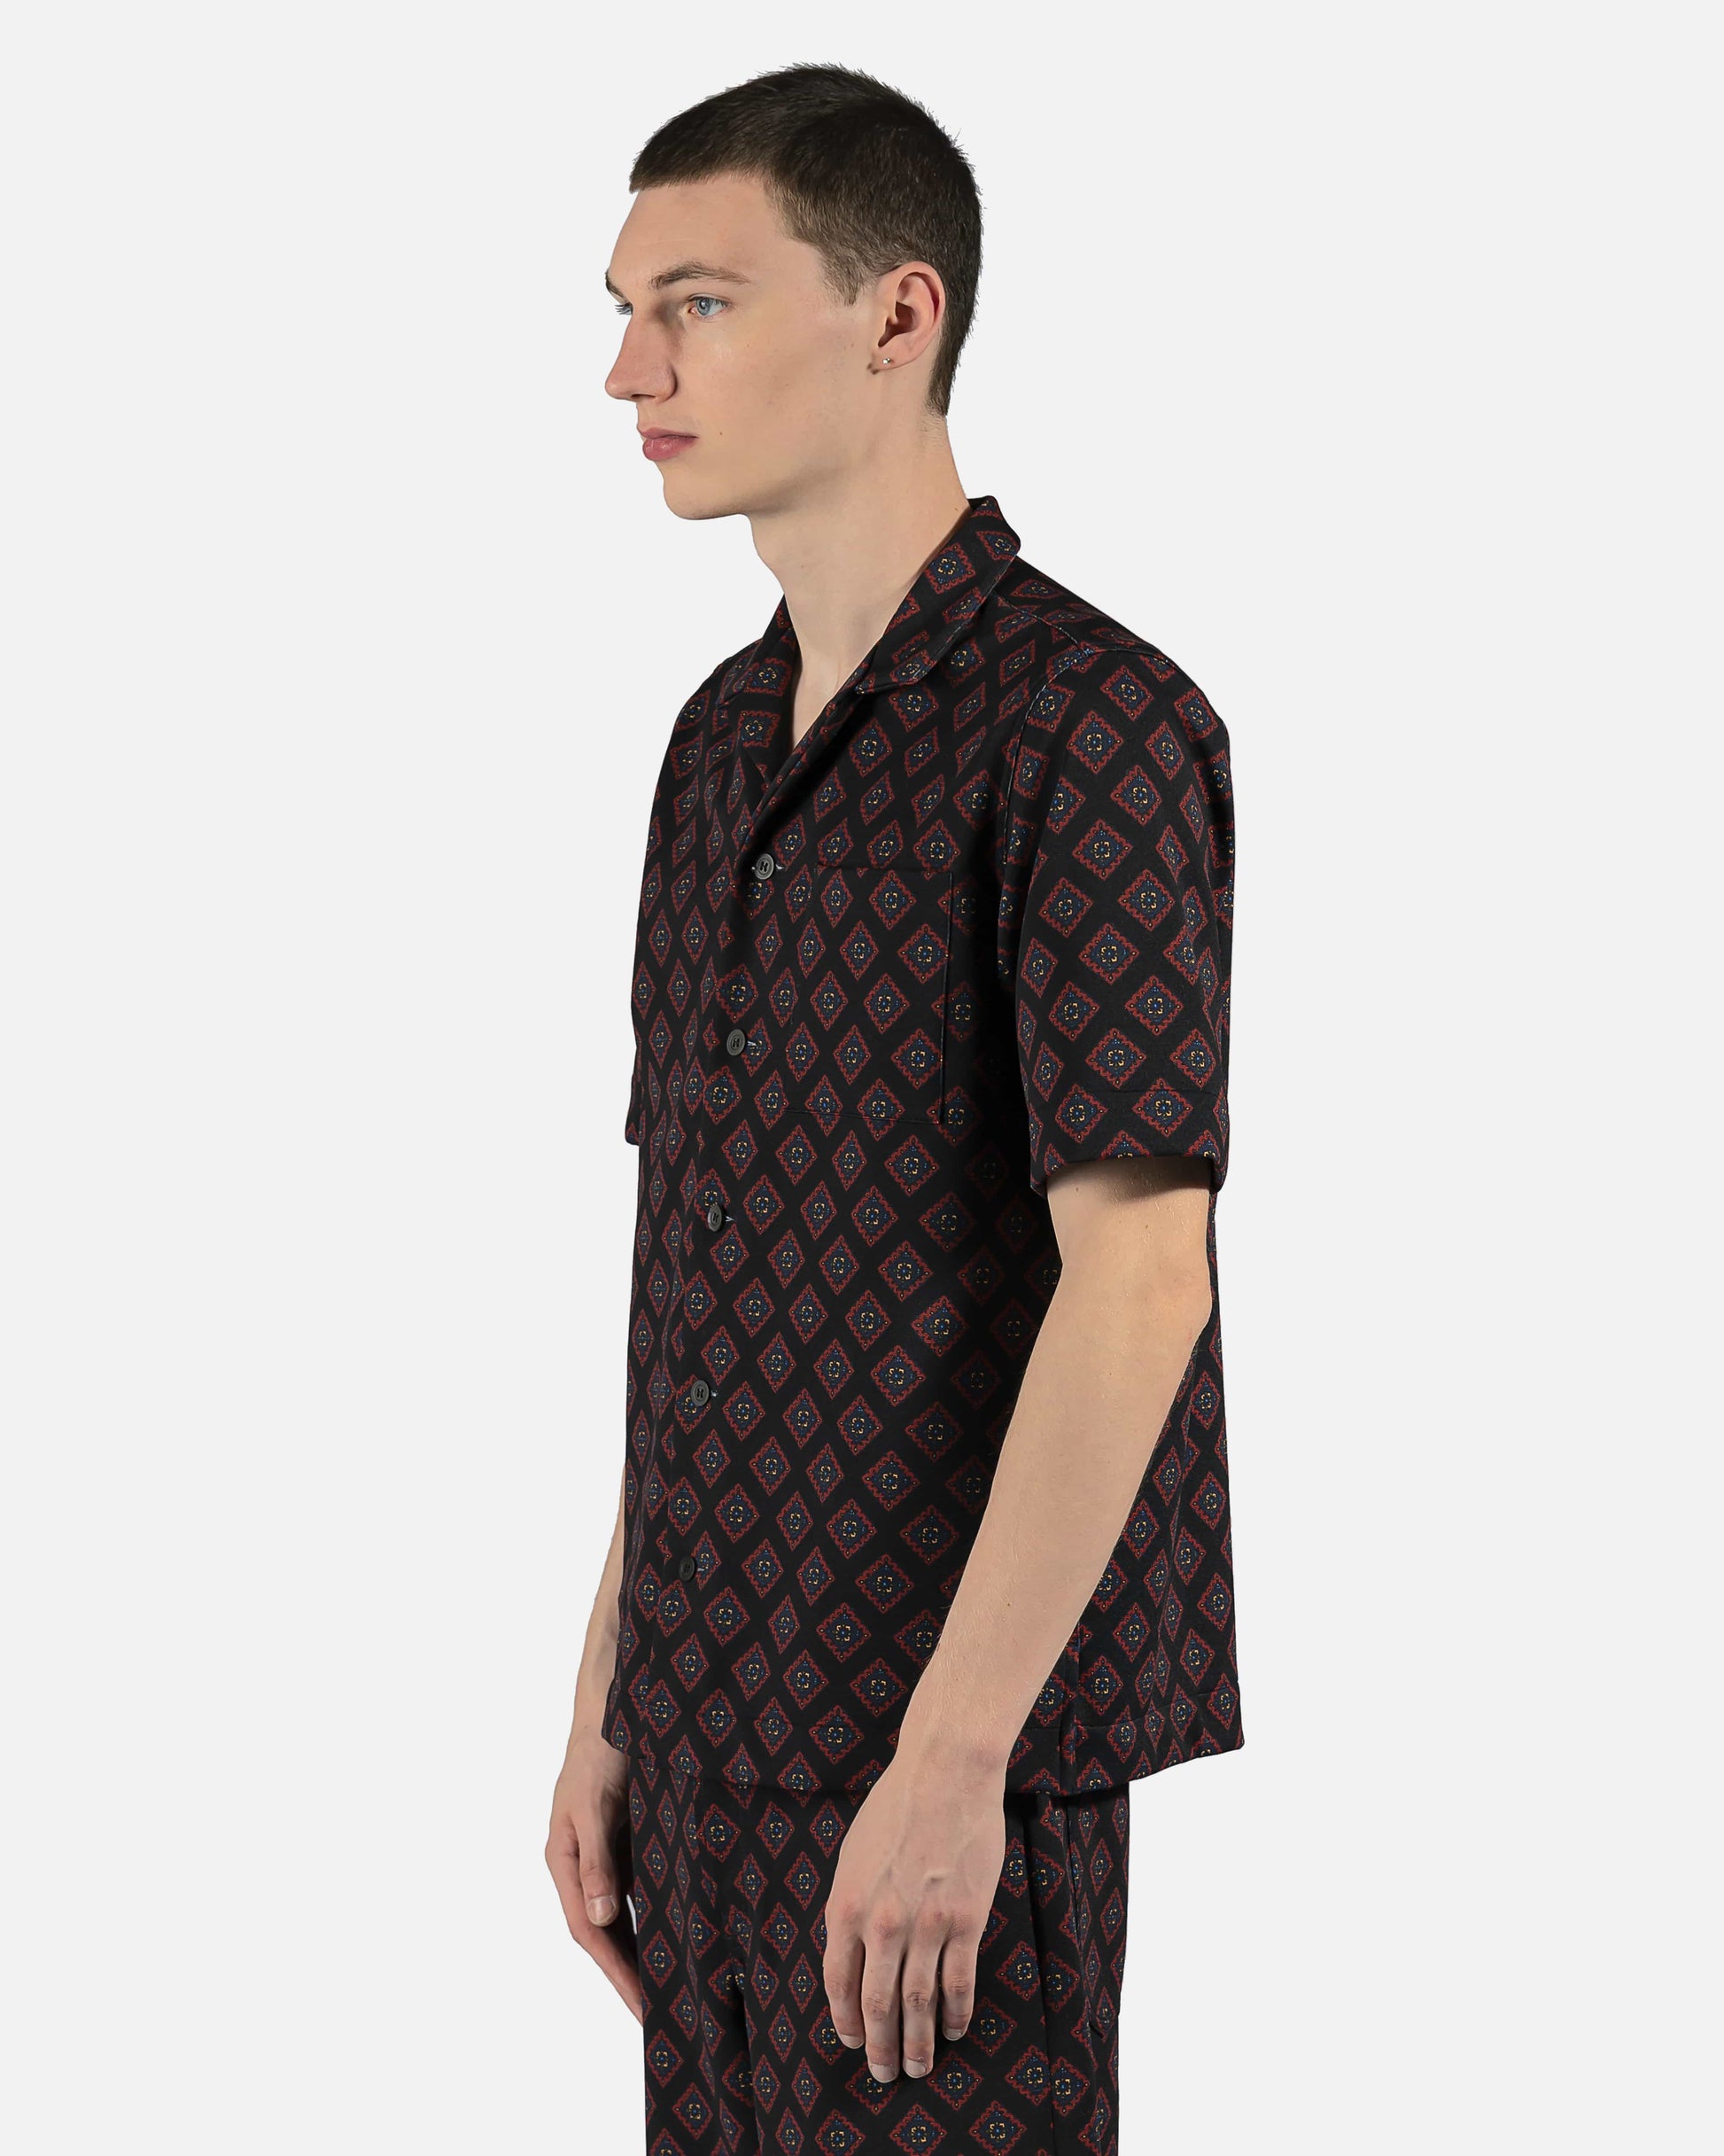 Dries Van Noten Men's Shirts Carltone Button-Up Shirt in Black